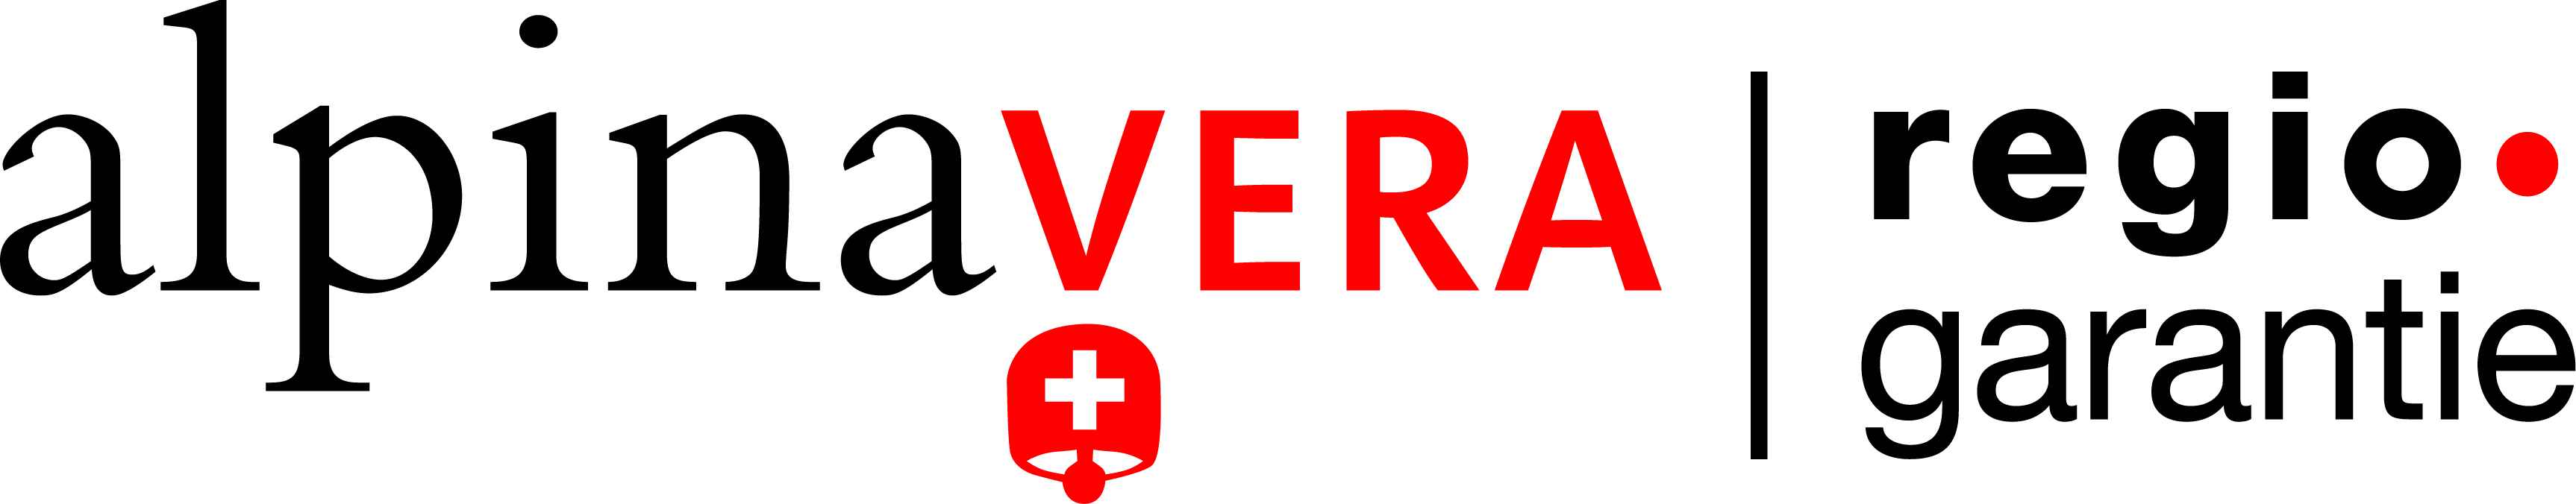 Logo Regional brand: alpinavera